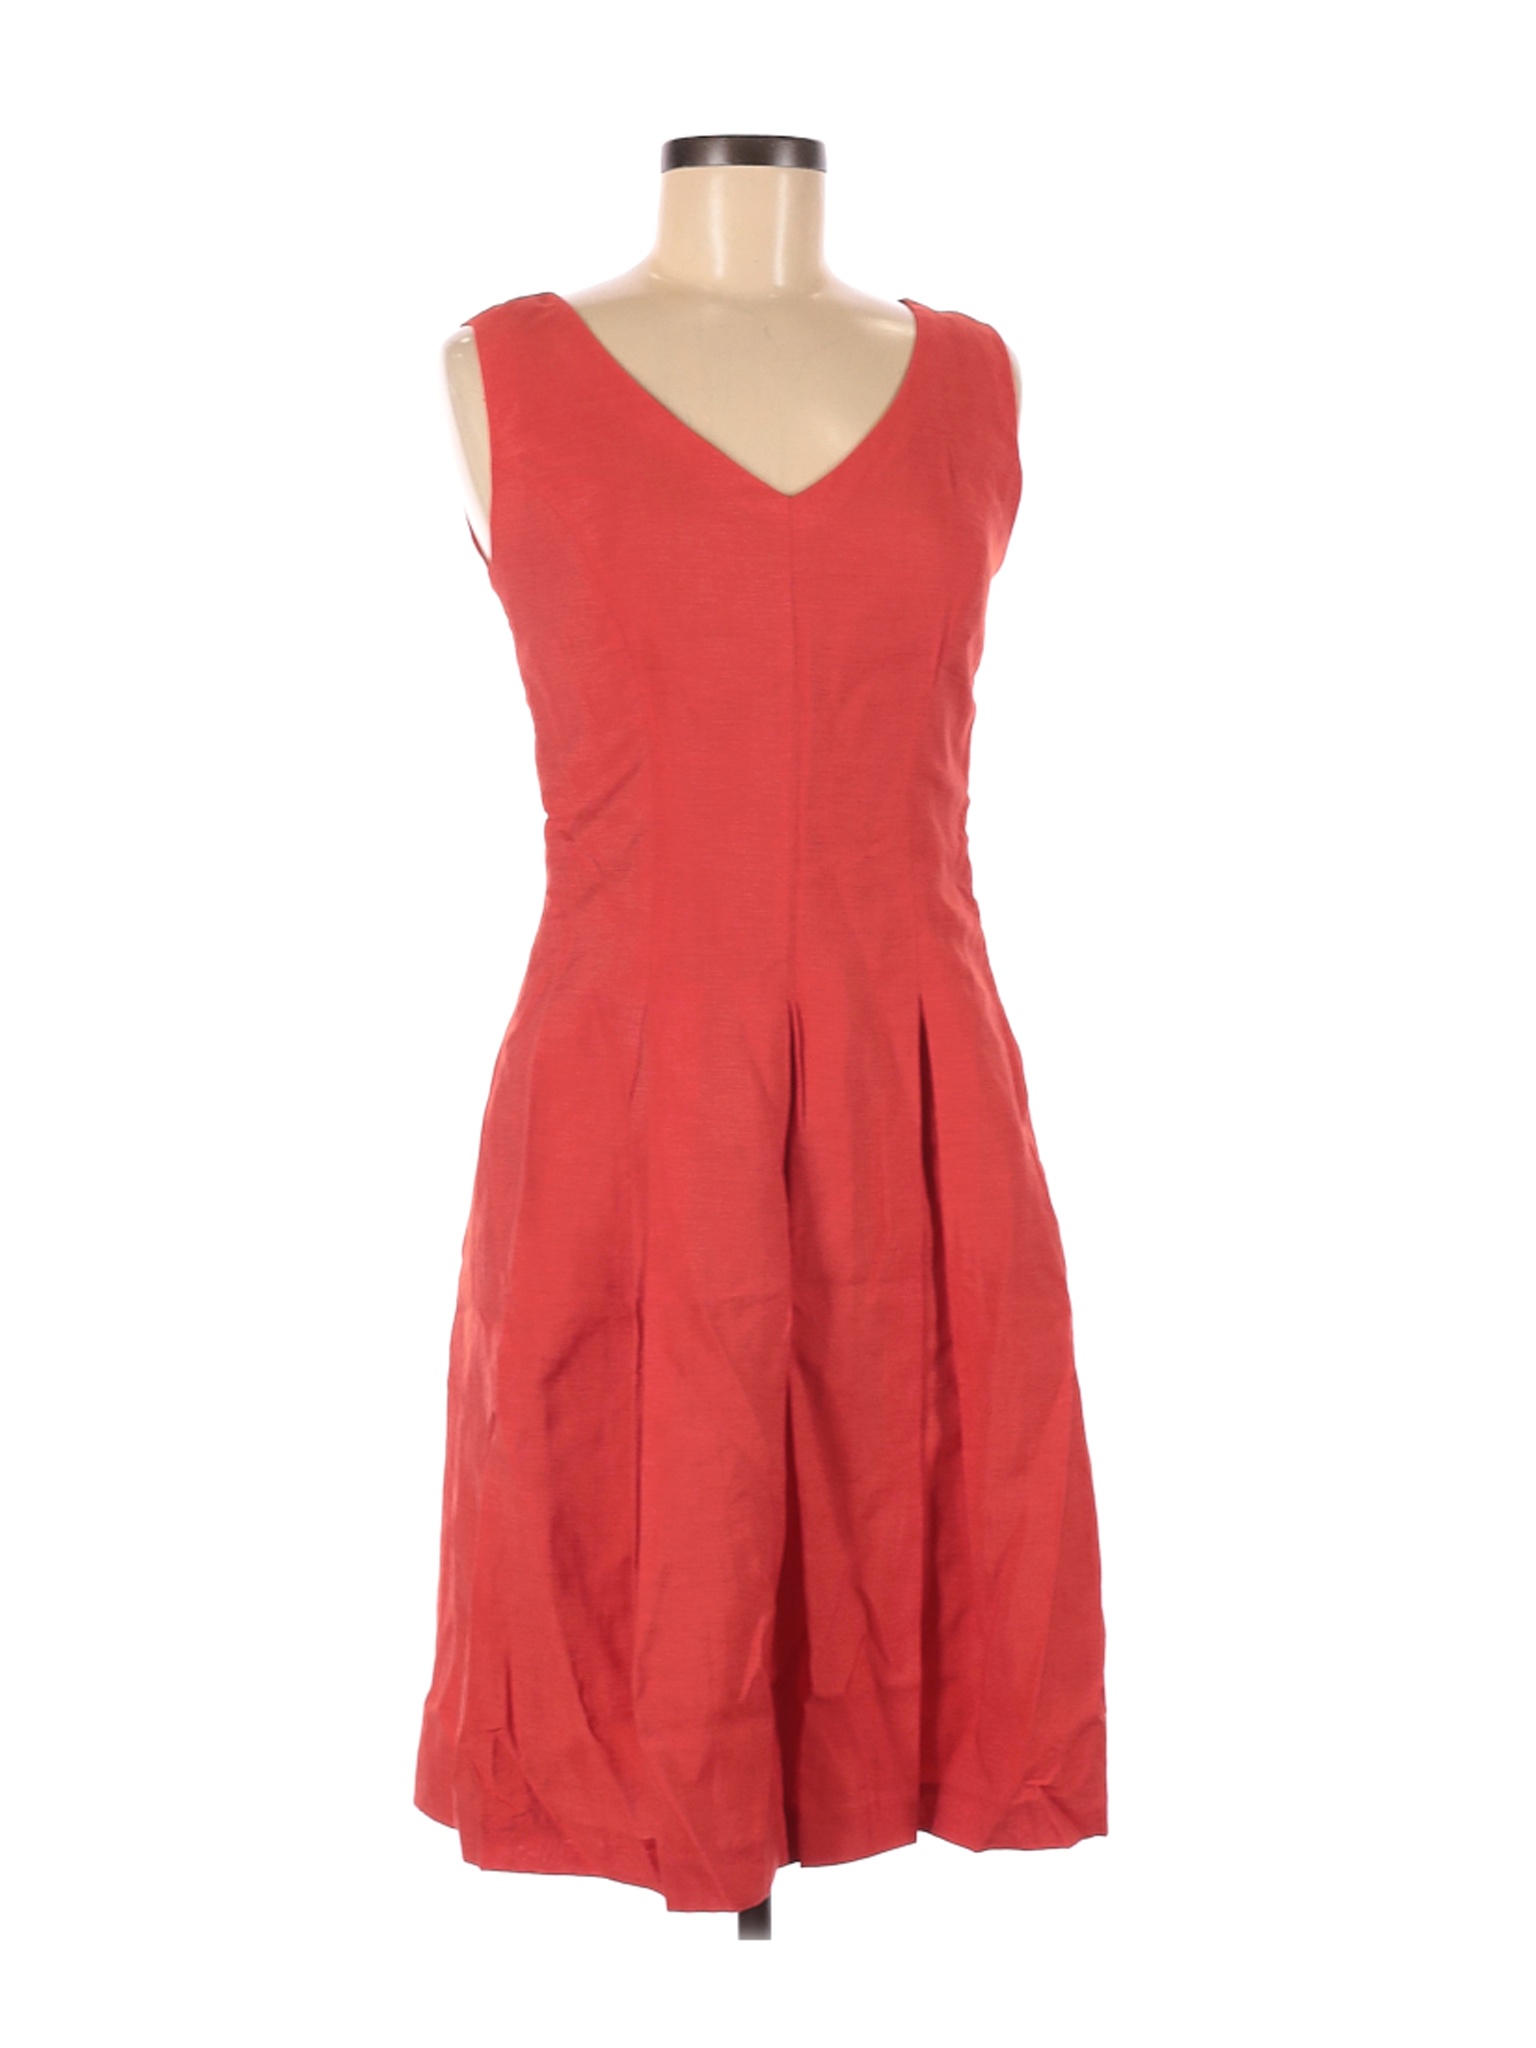 Coldwater Creek Women Red Casual Dress 6 | eBay